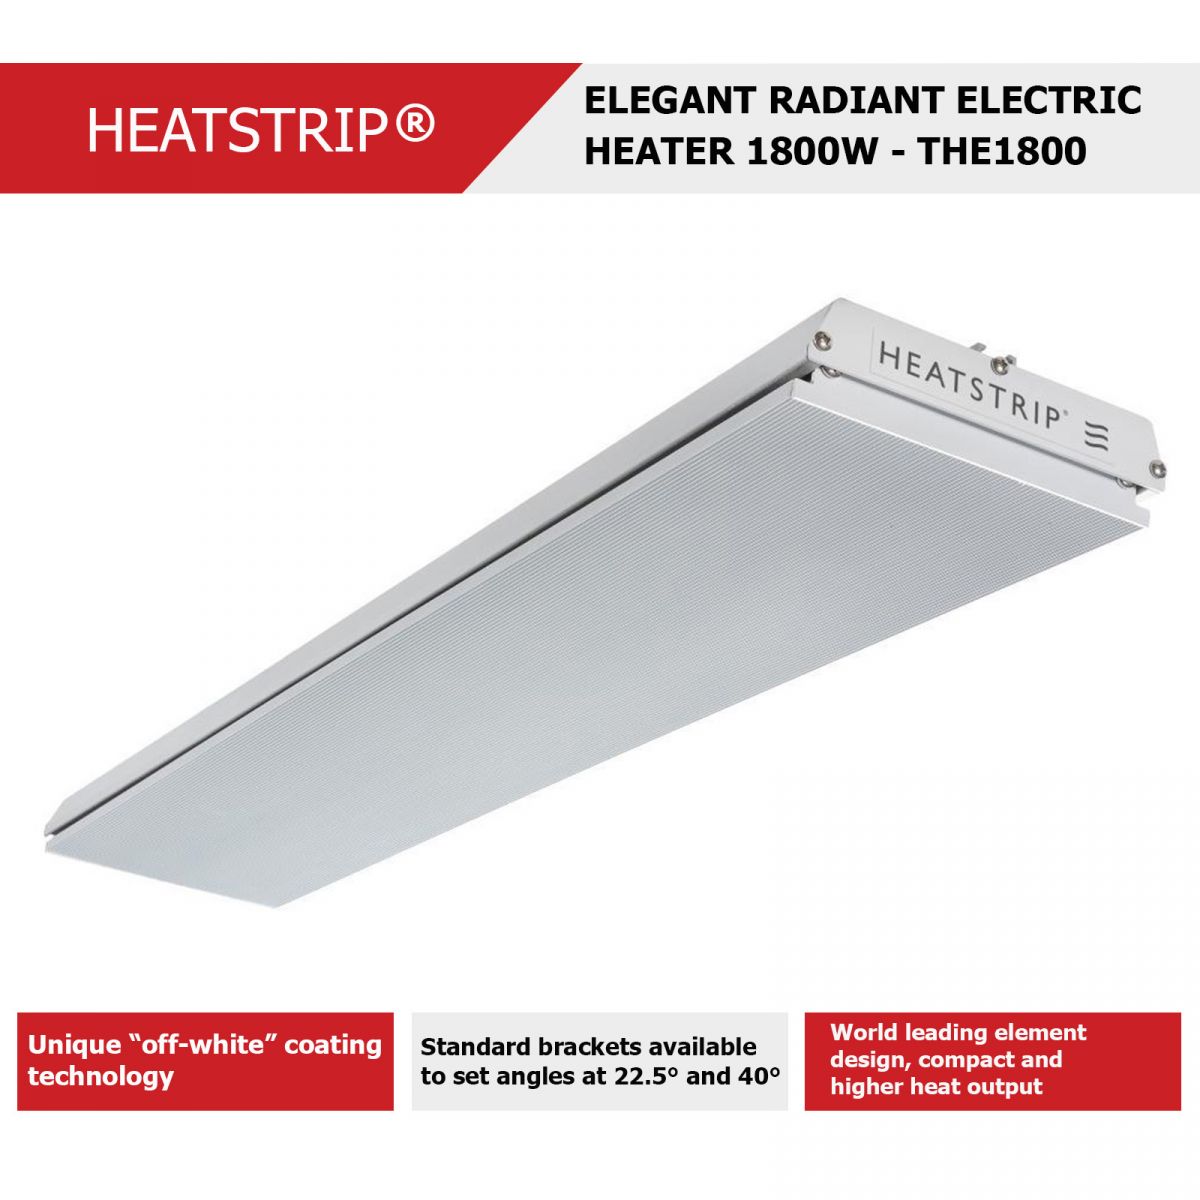 HEATSTRIP 1800W, 240V, 50Hz, 7.5A, IP55 - Elegant Radiant Electric Heaters 